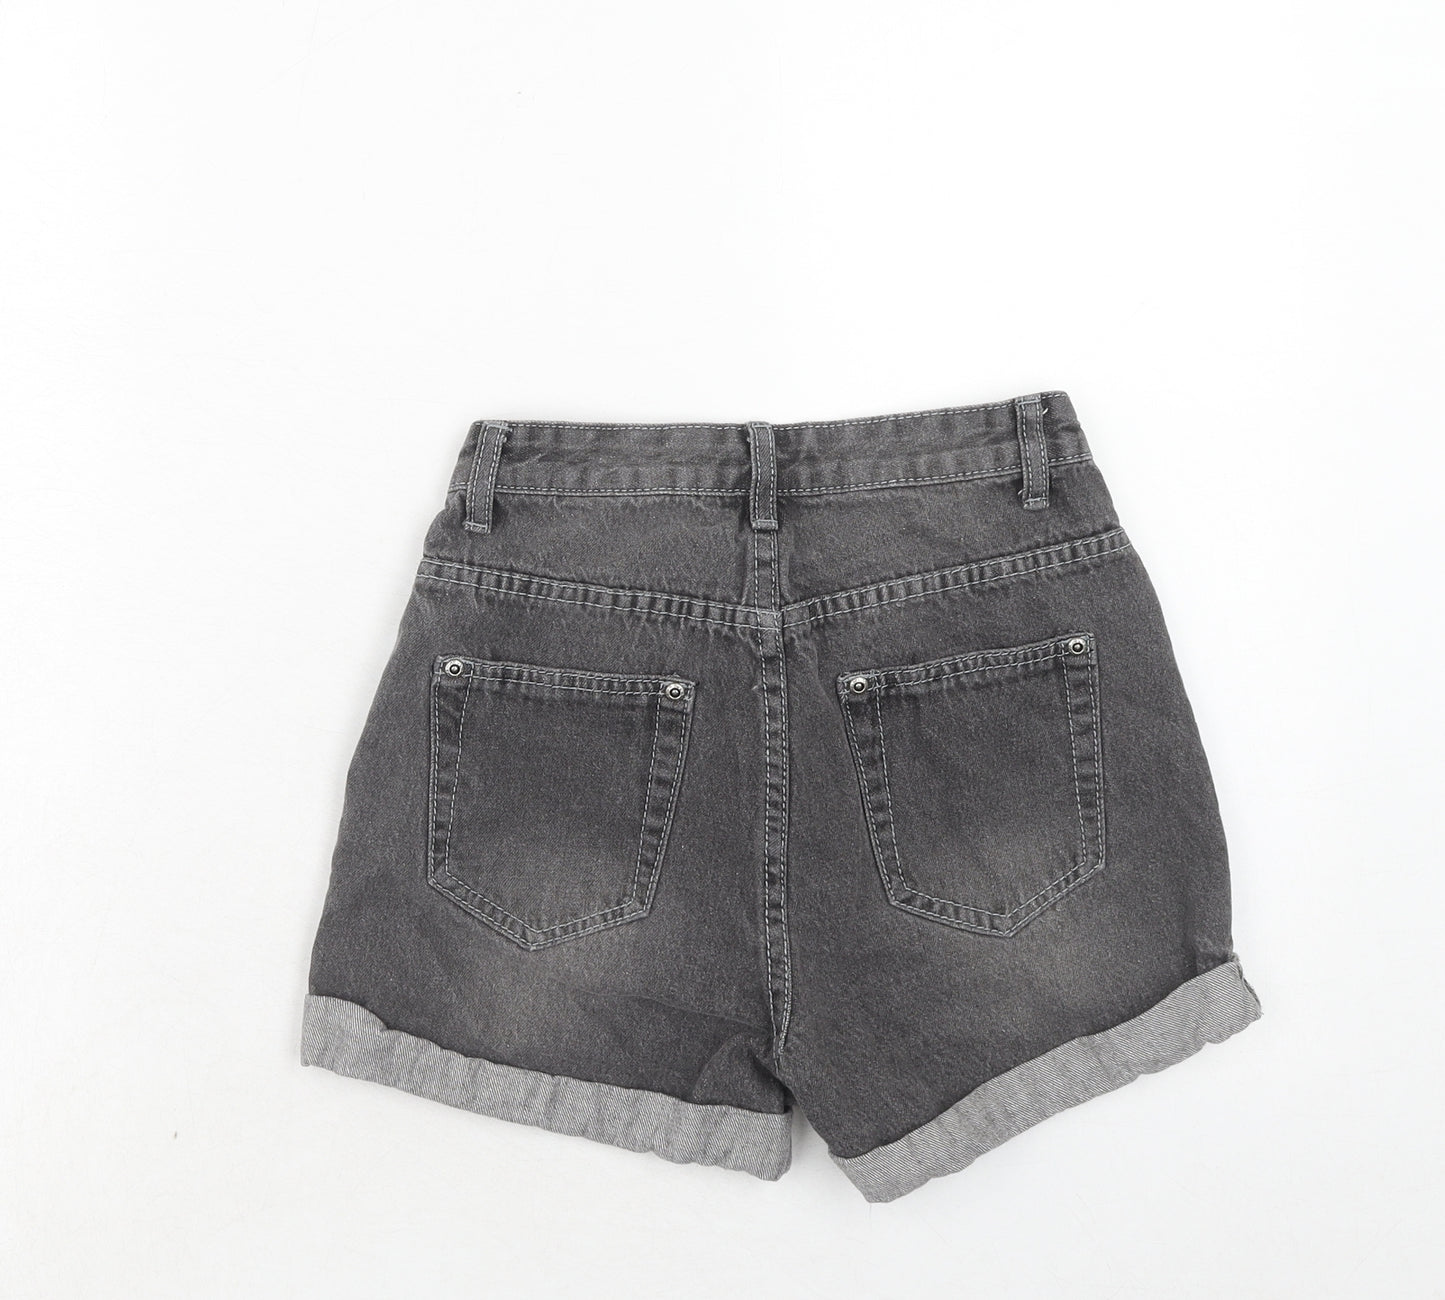 Bohoo Womens Grey Cotton Hot Pants Shorts Size 6 Regular Zip